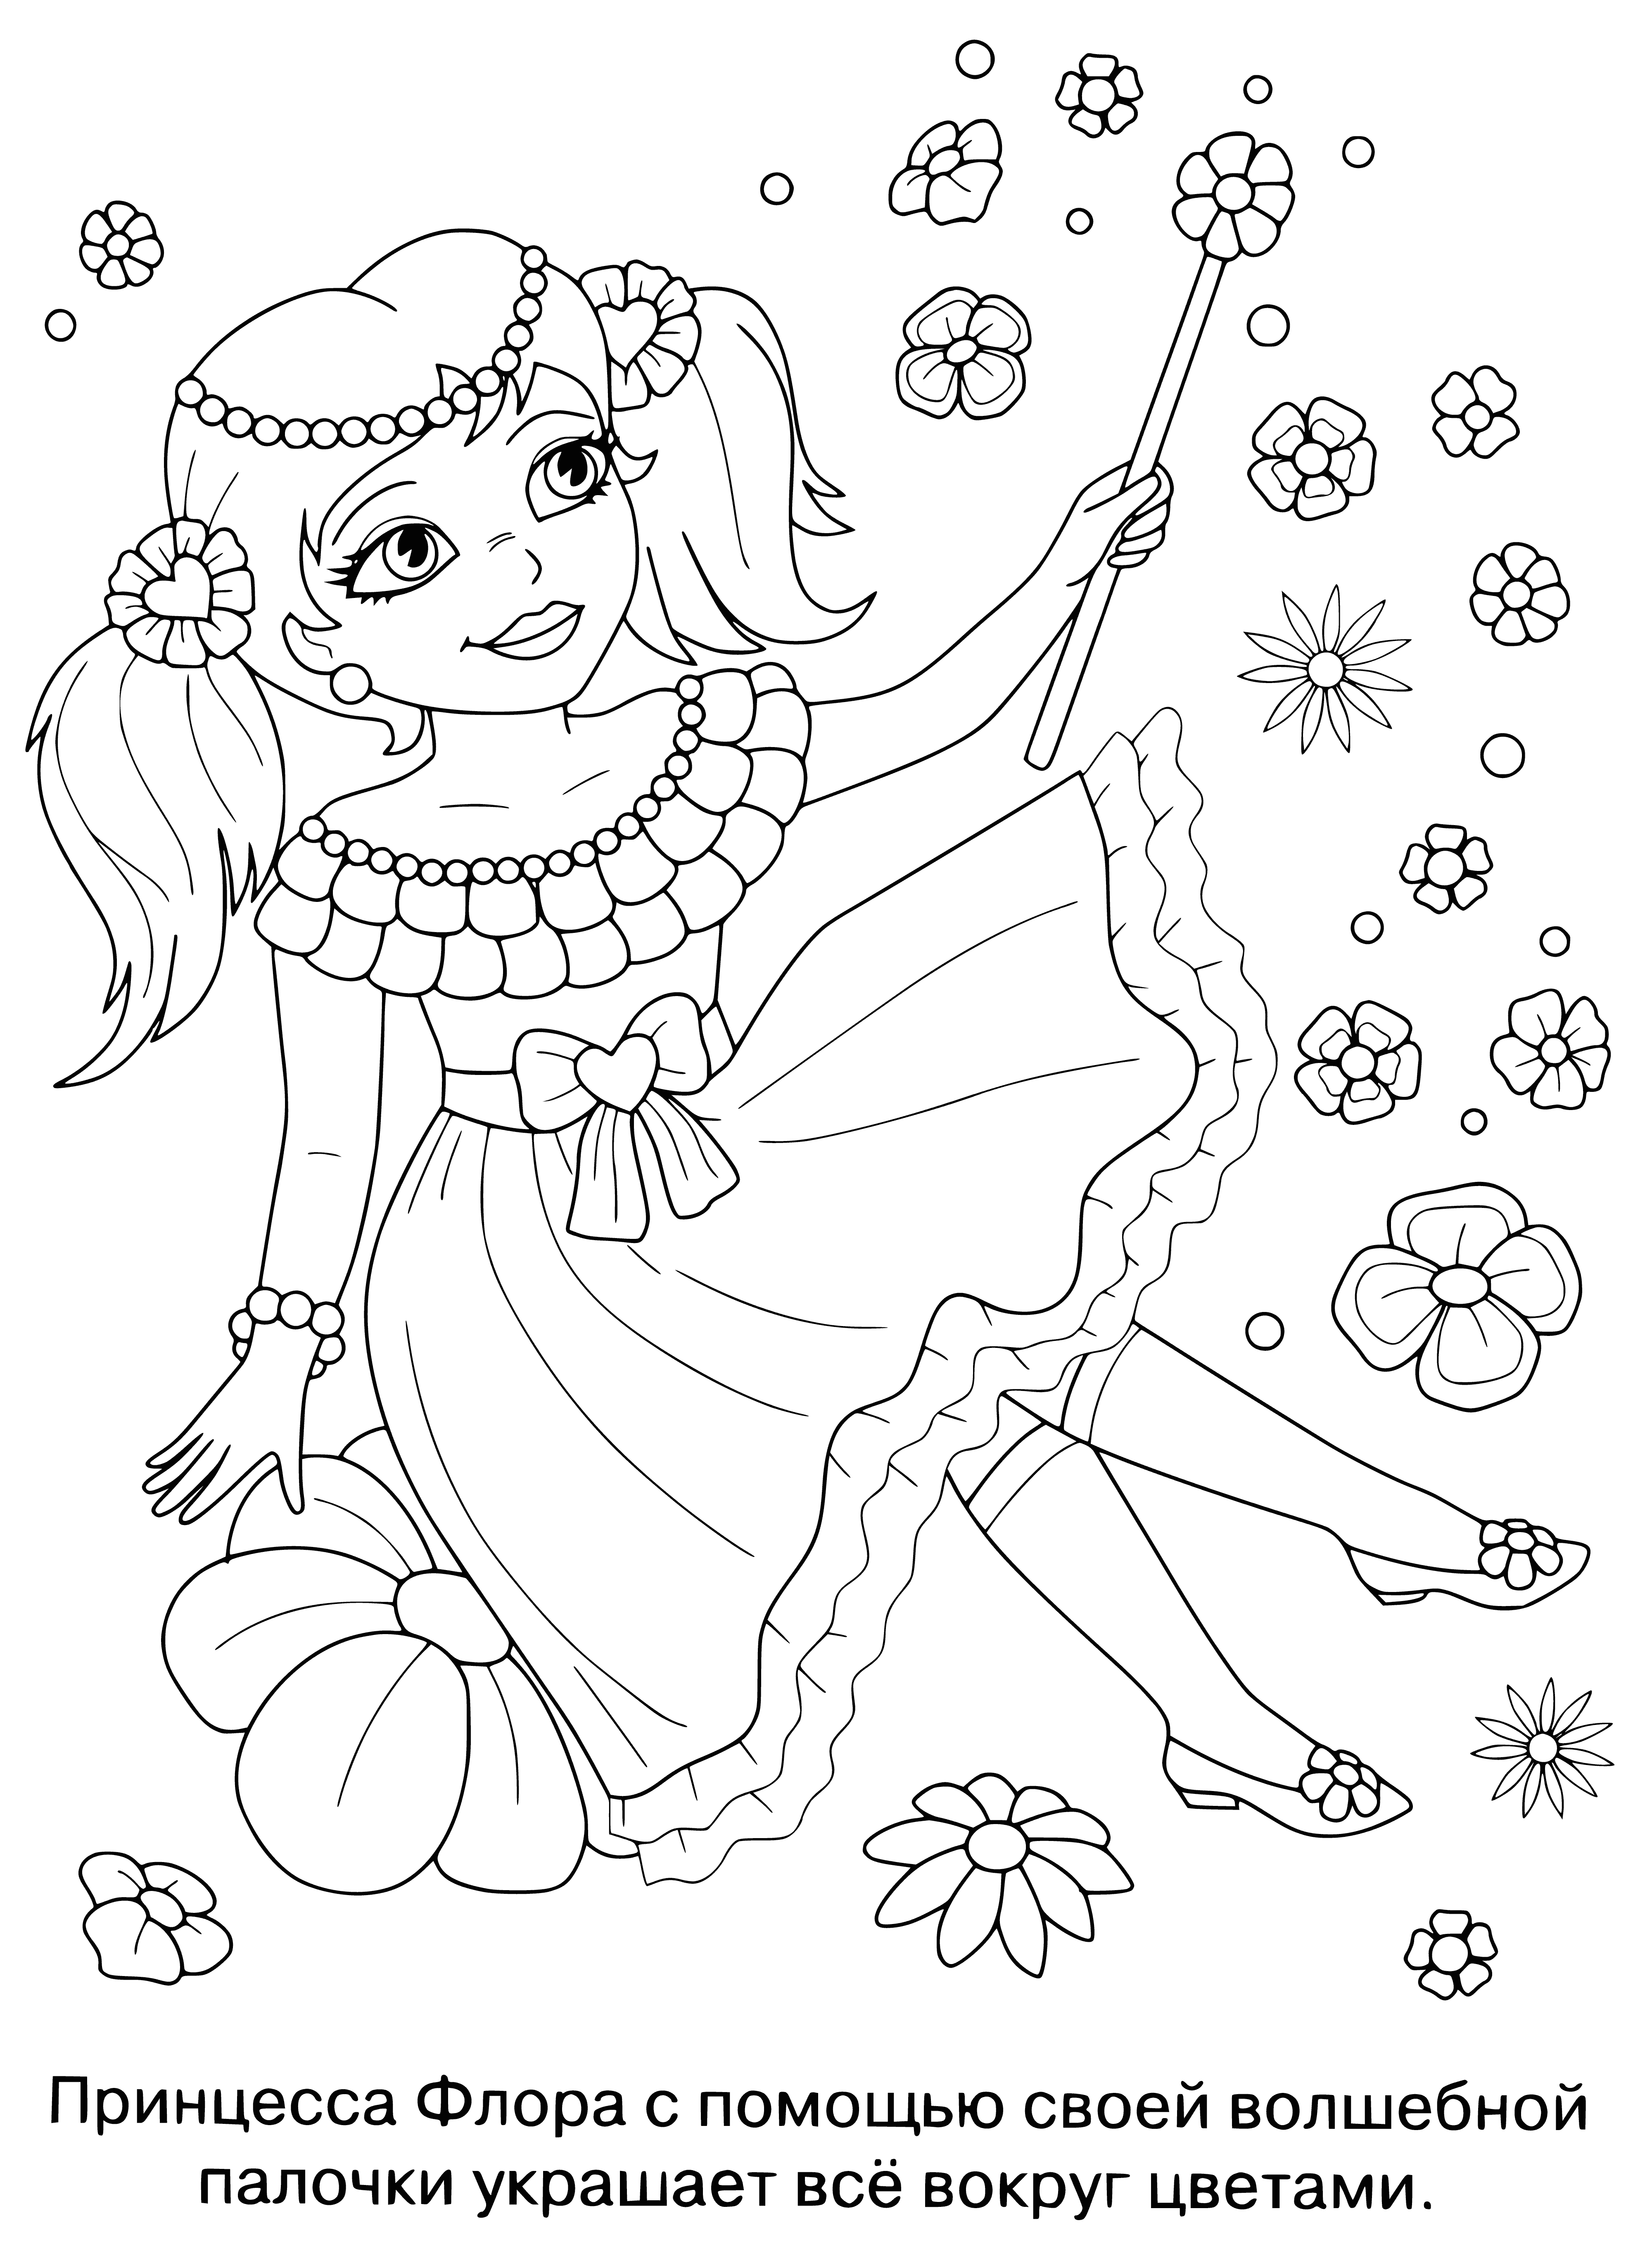 Princess Flora coloring page